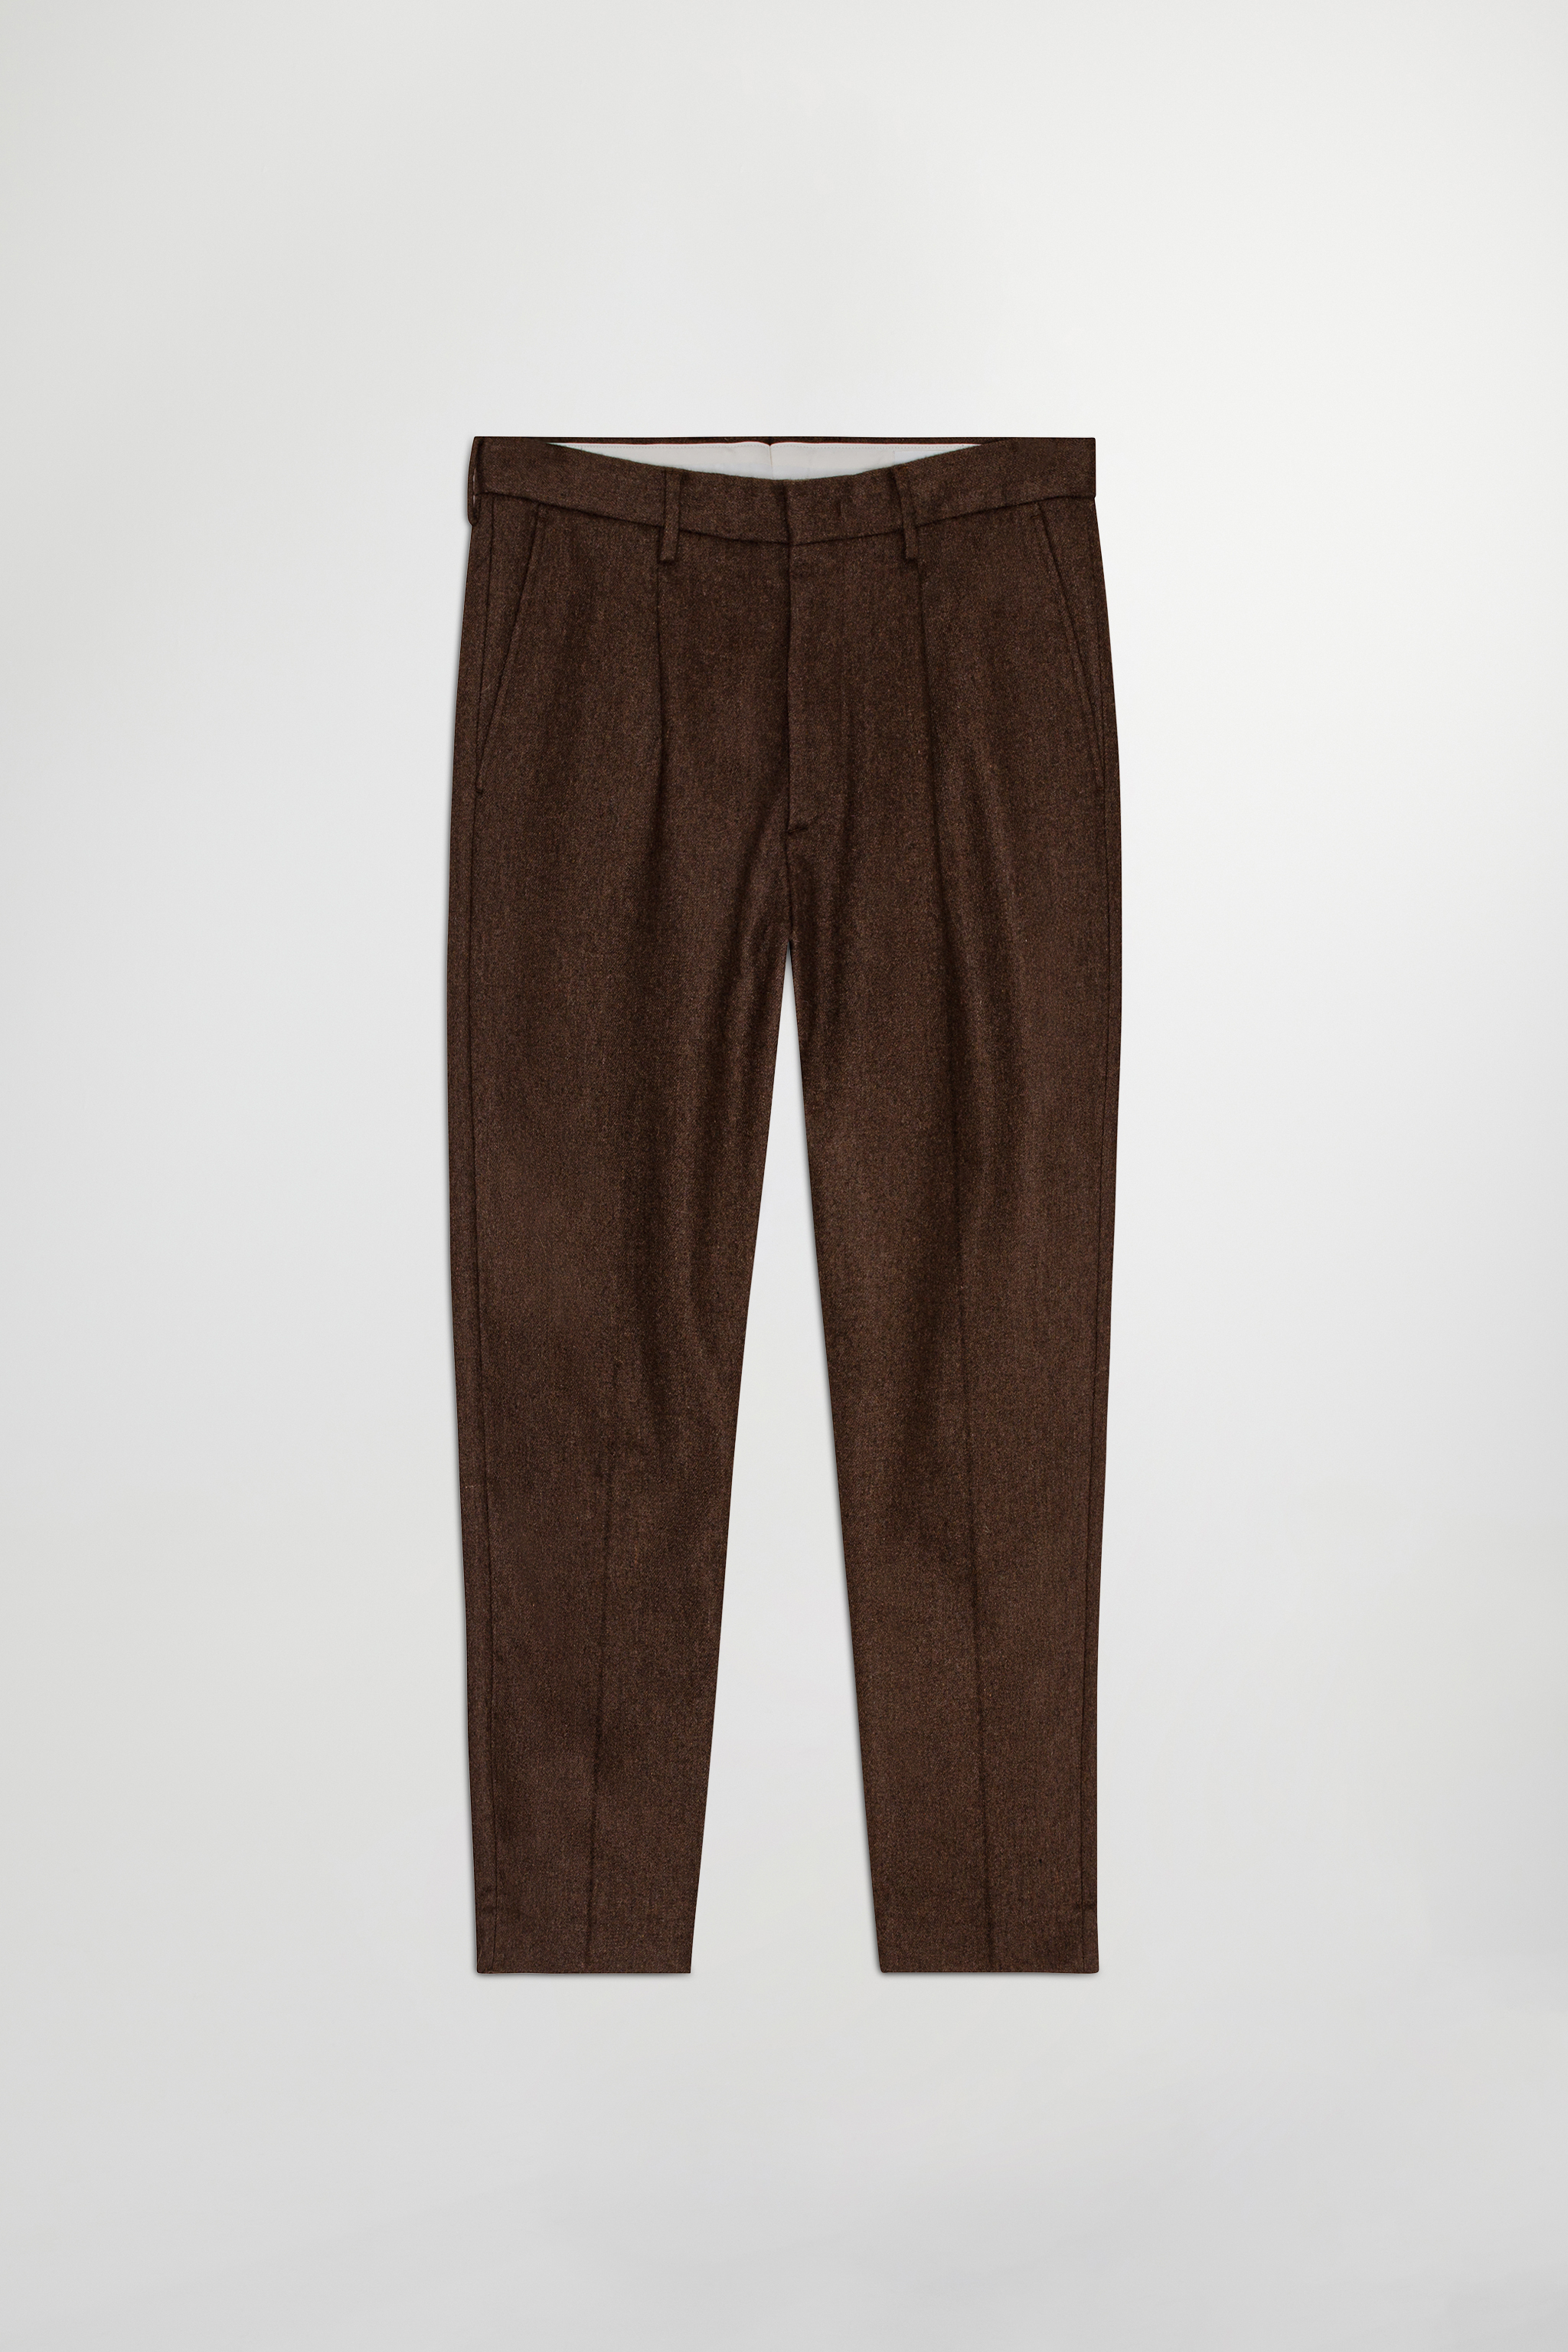 Bill 1630 men's trousers - Brown - Buy online at NN.07®